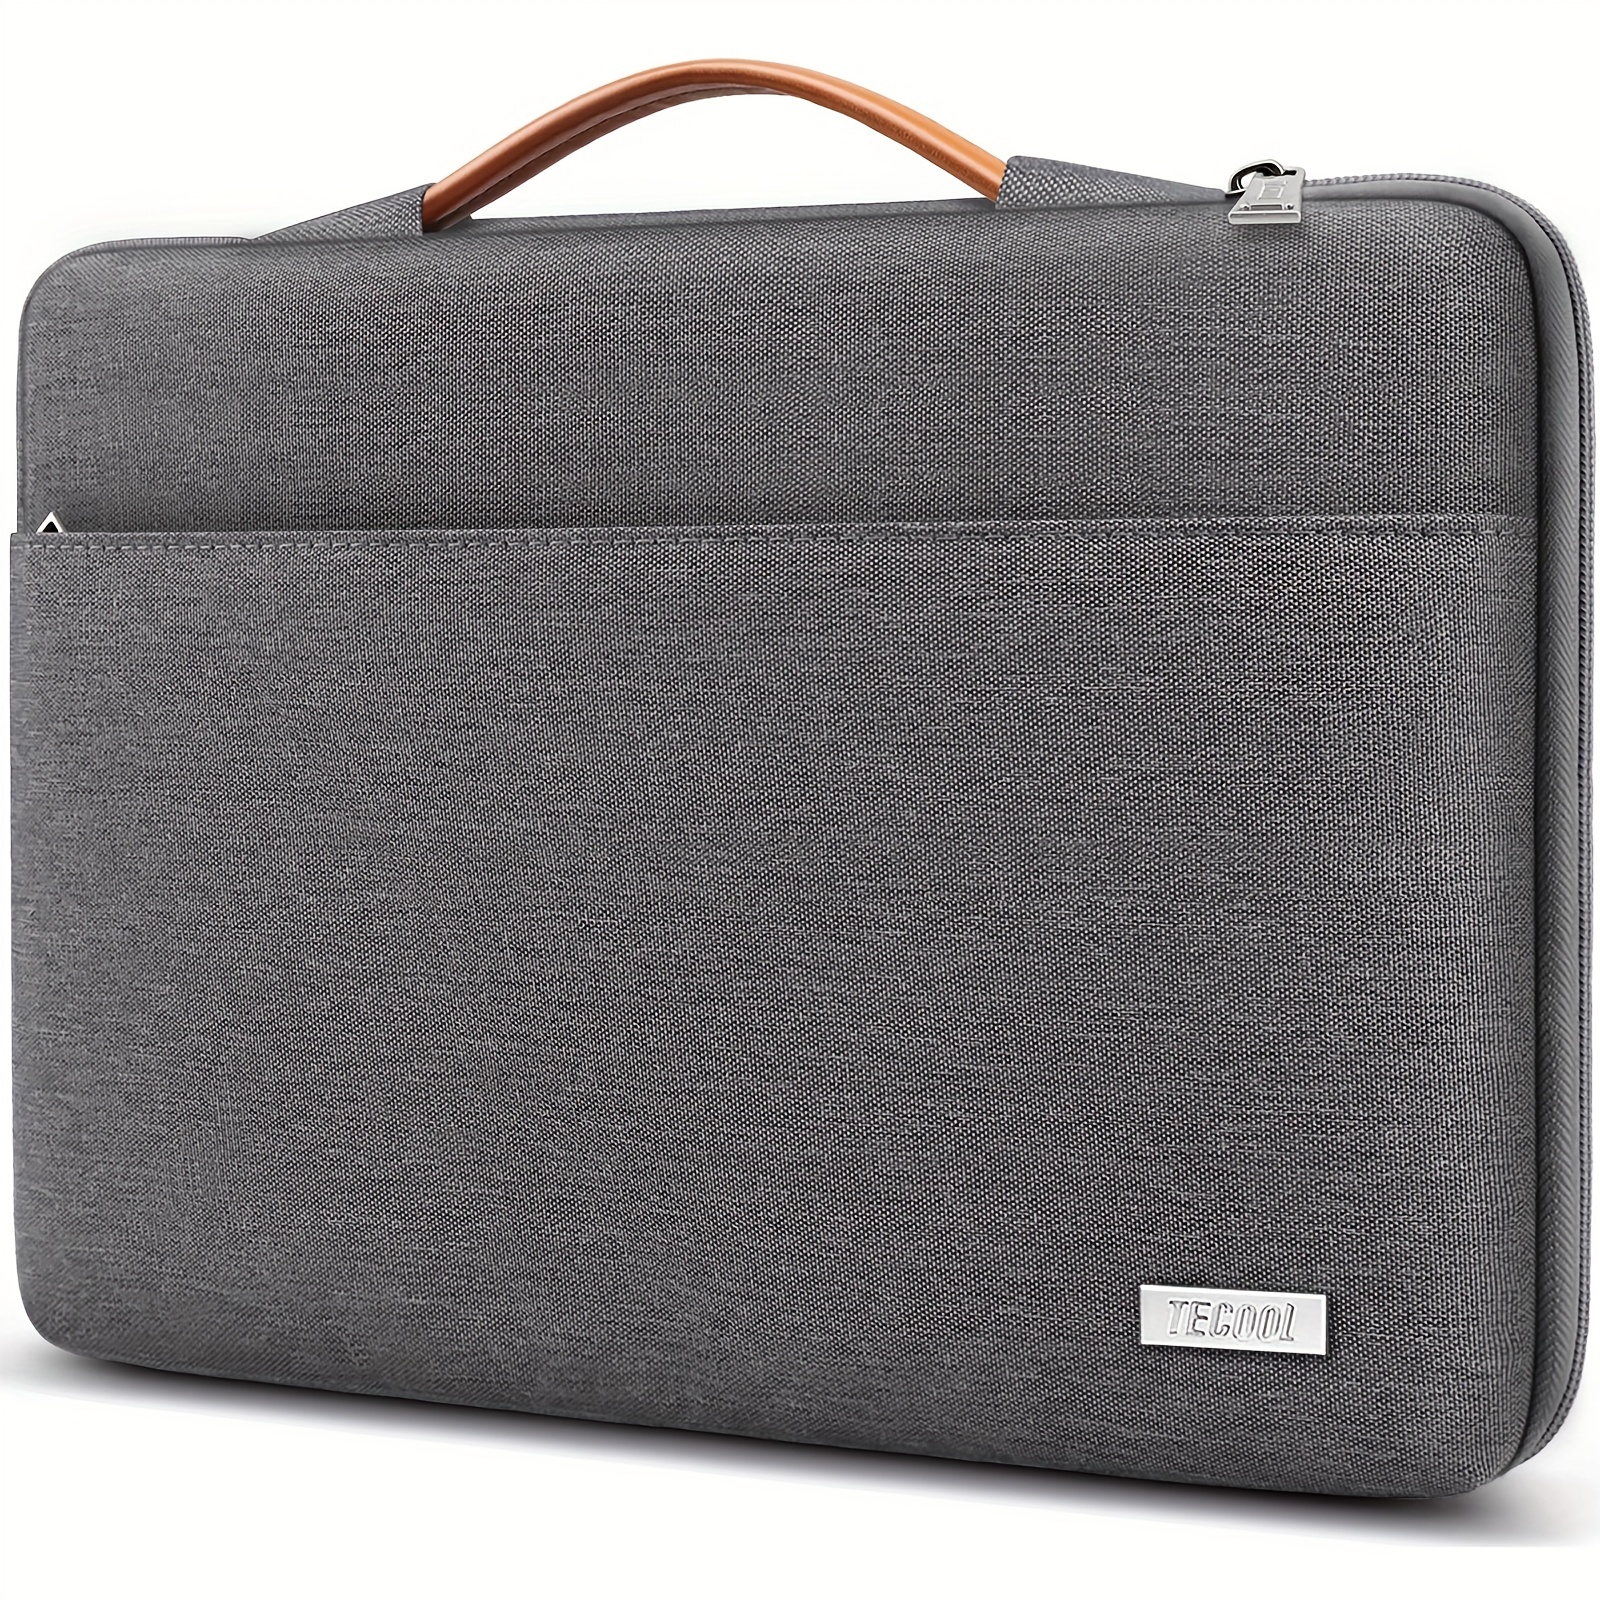 14 inch-16 inch Laptop Case Bag Chromebook Sleeve Universal Laptop Carrying Bag Notebook Ultrabook Bag Tablet Cover for MacBook Apple Samsung